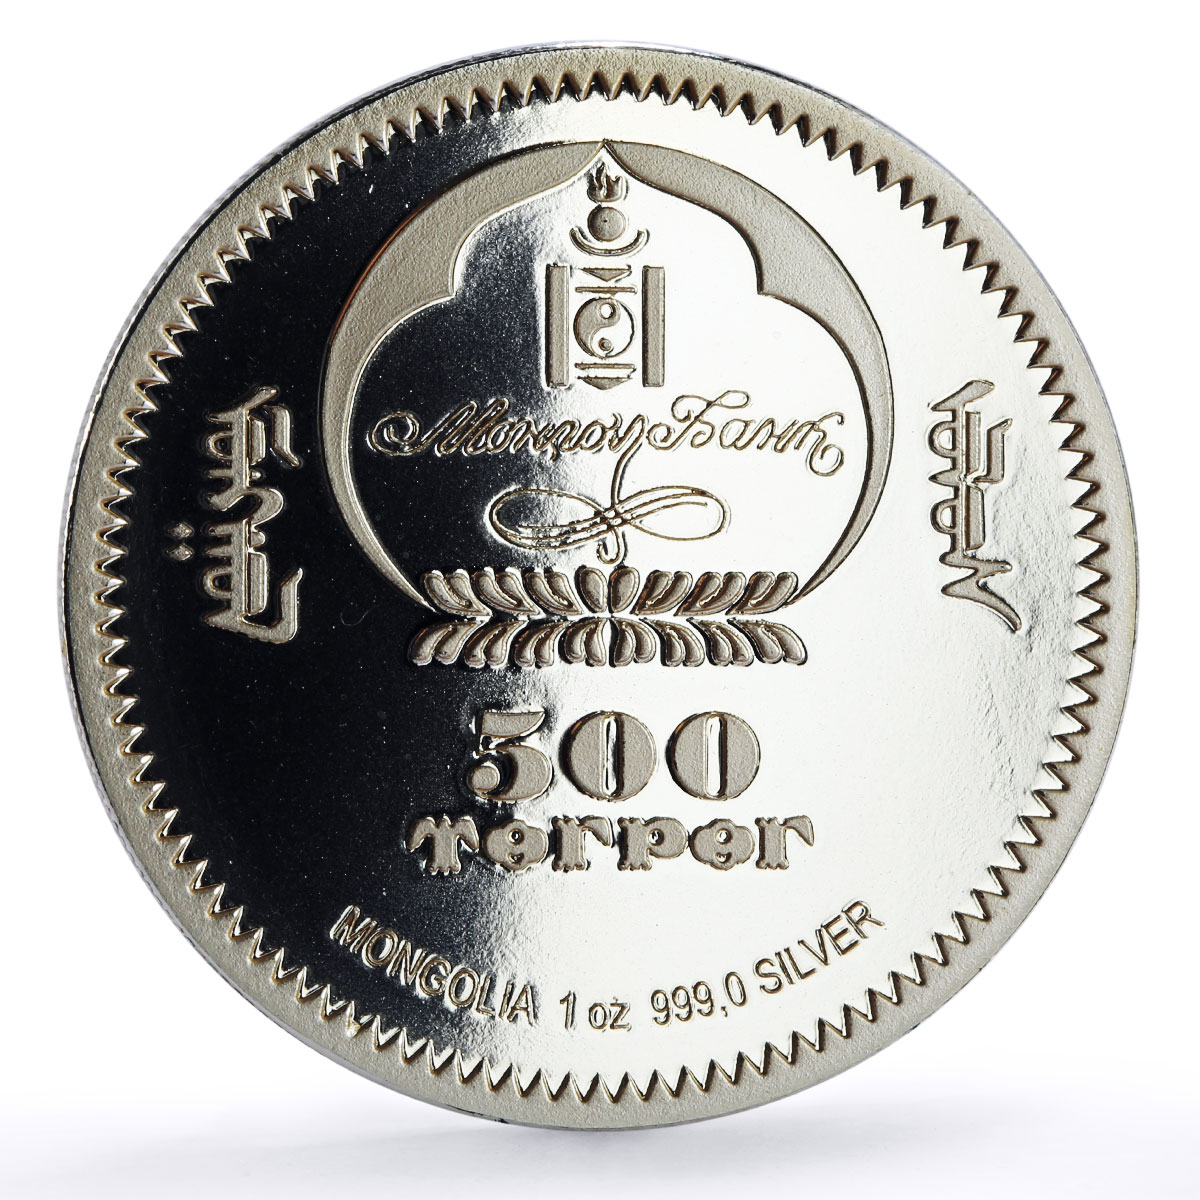 Mongolia 500 togrog Japanese Sumo Wrestler Tanikaze colored silver coin 2005